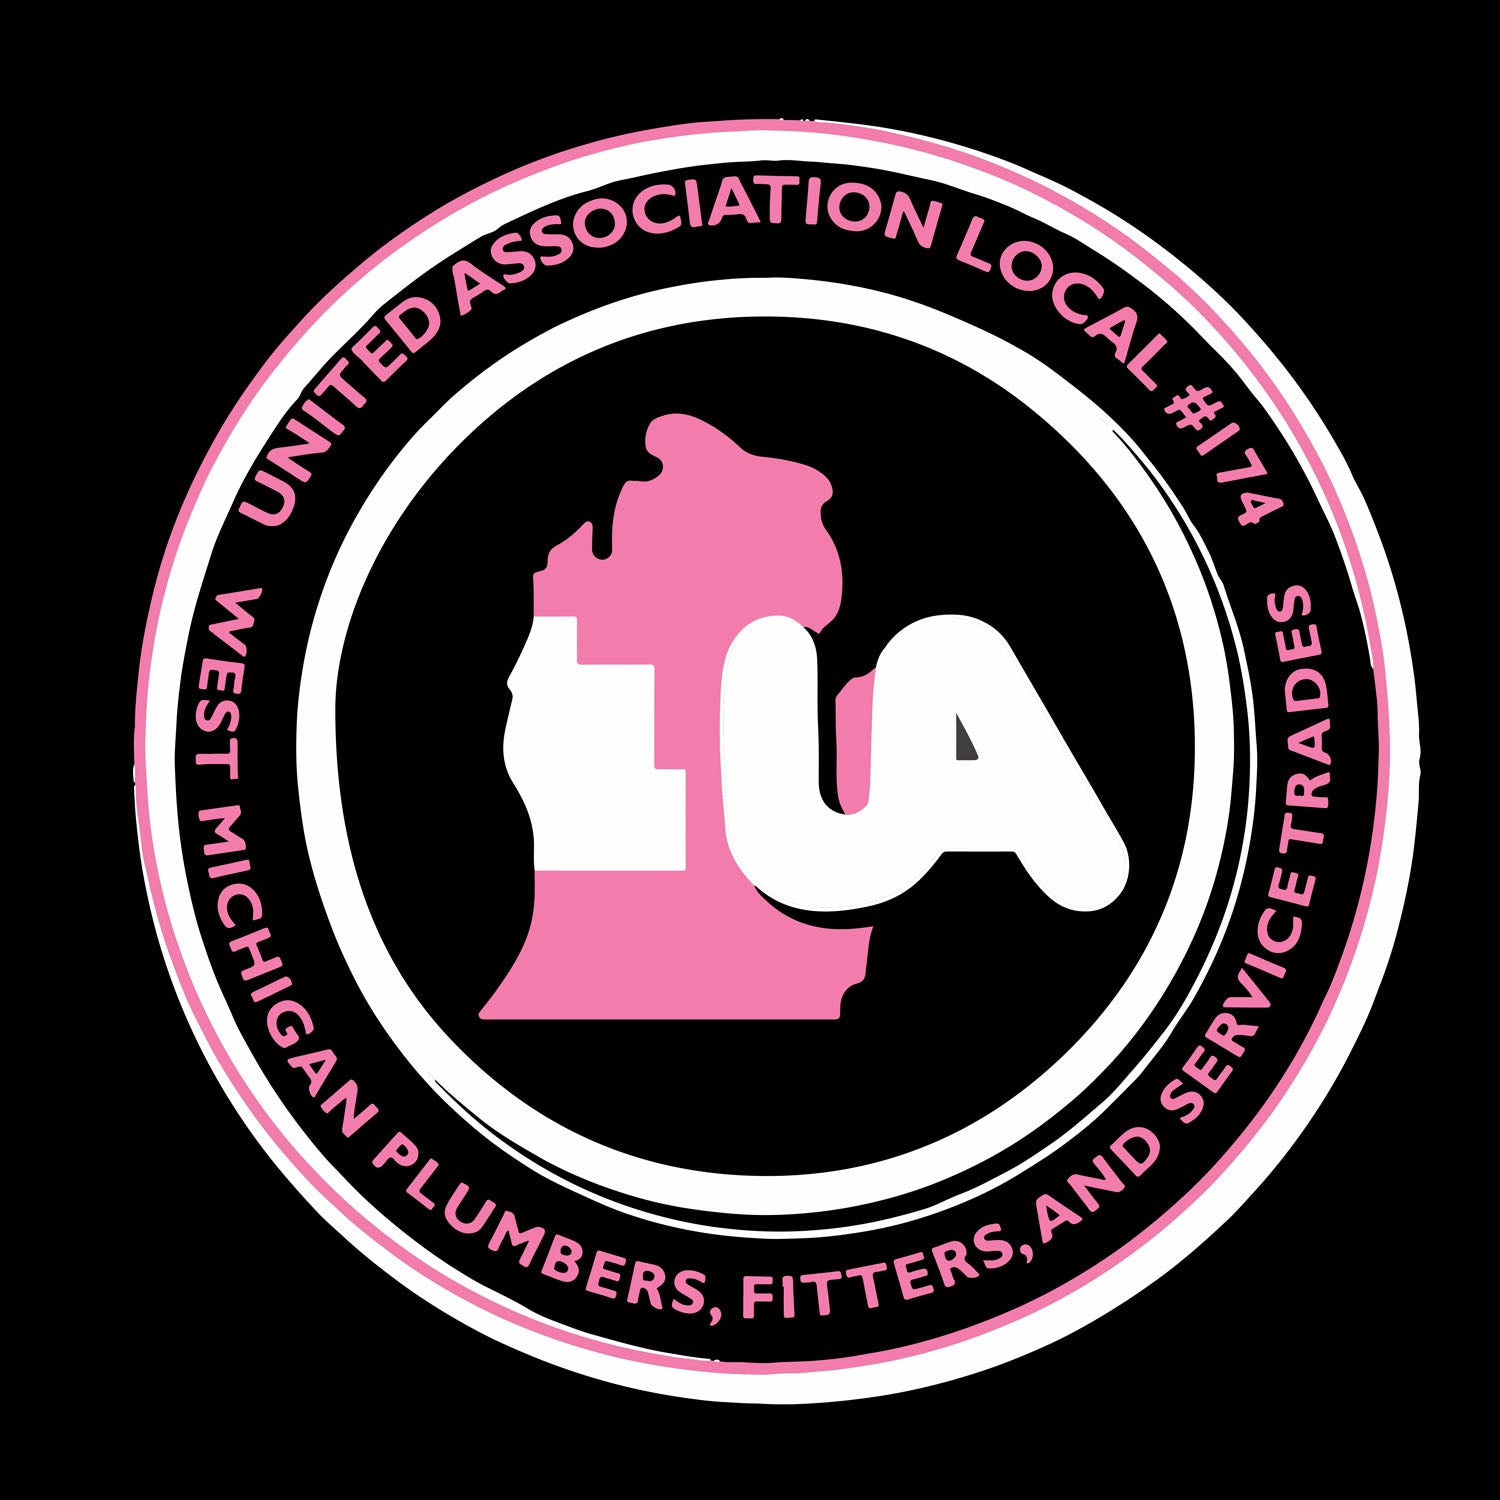 UA 174 Pink White Logo Decal